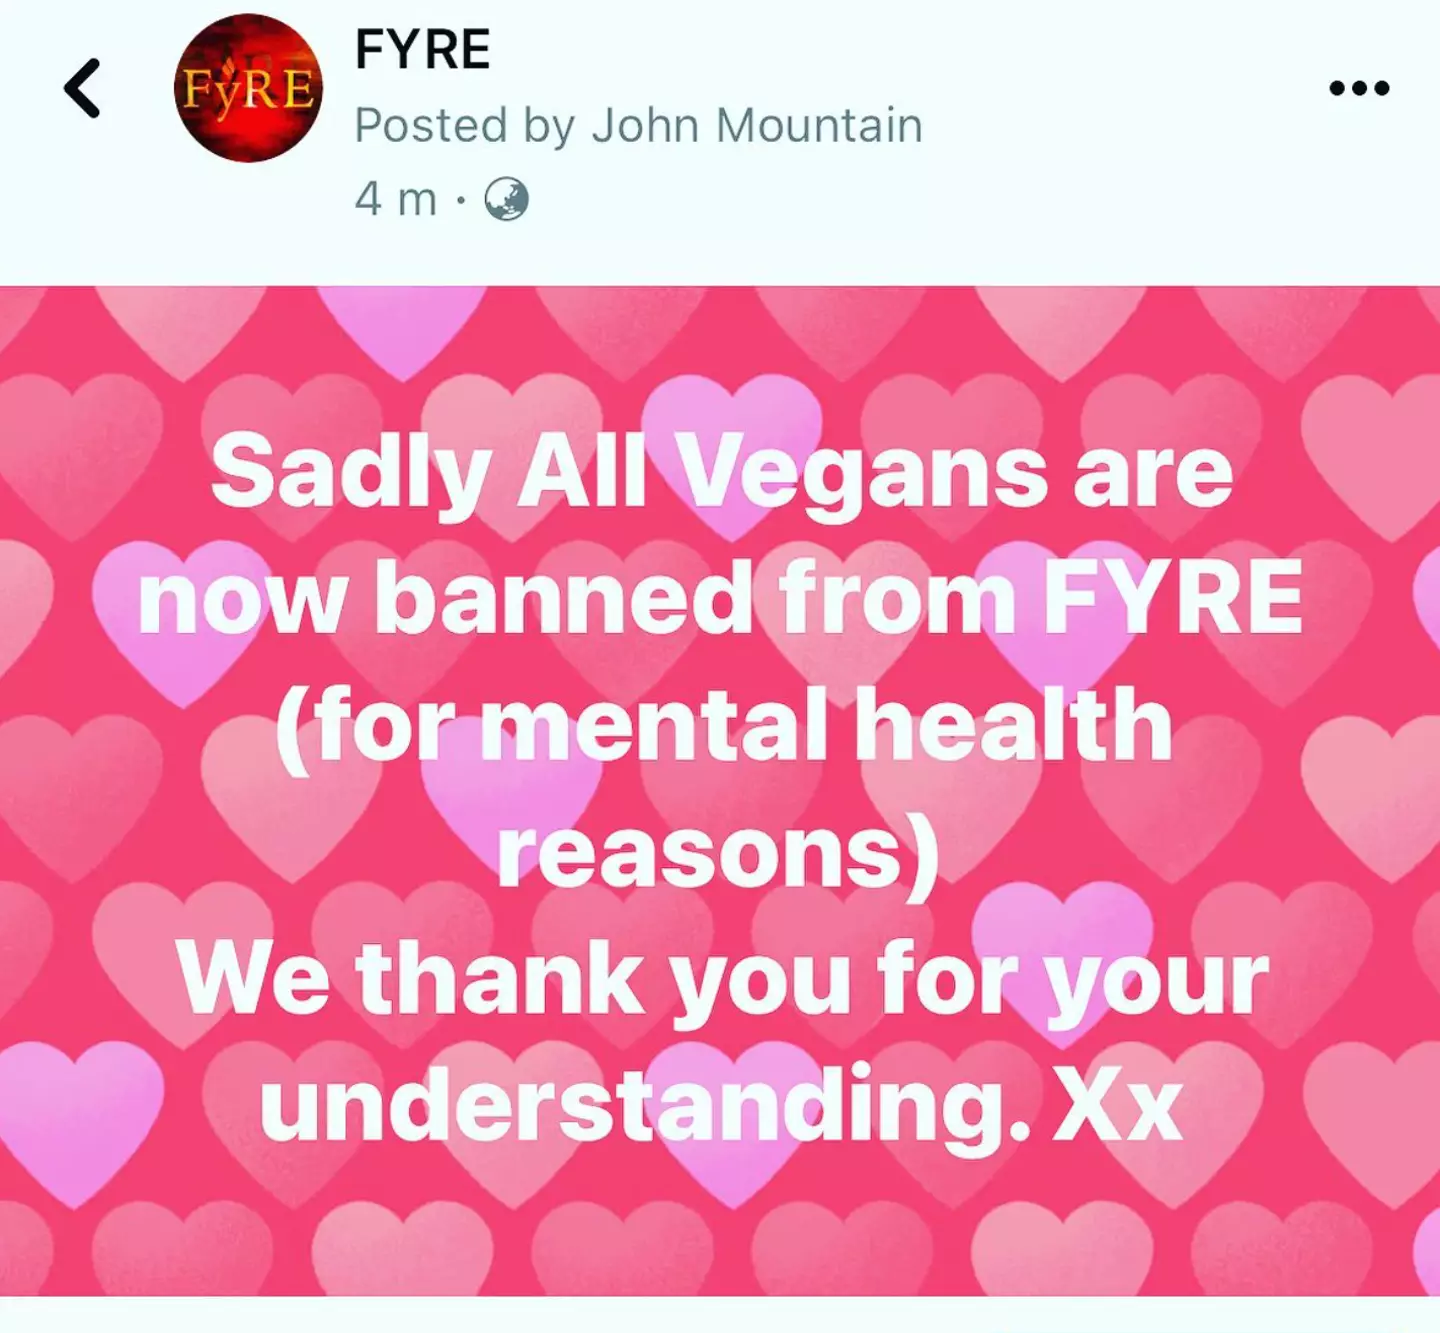 John Mountain announced vegans were banned from Fyre.